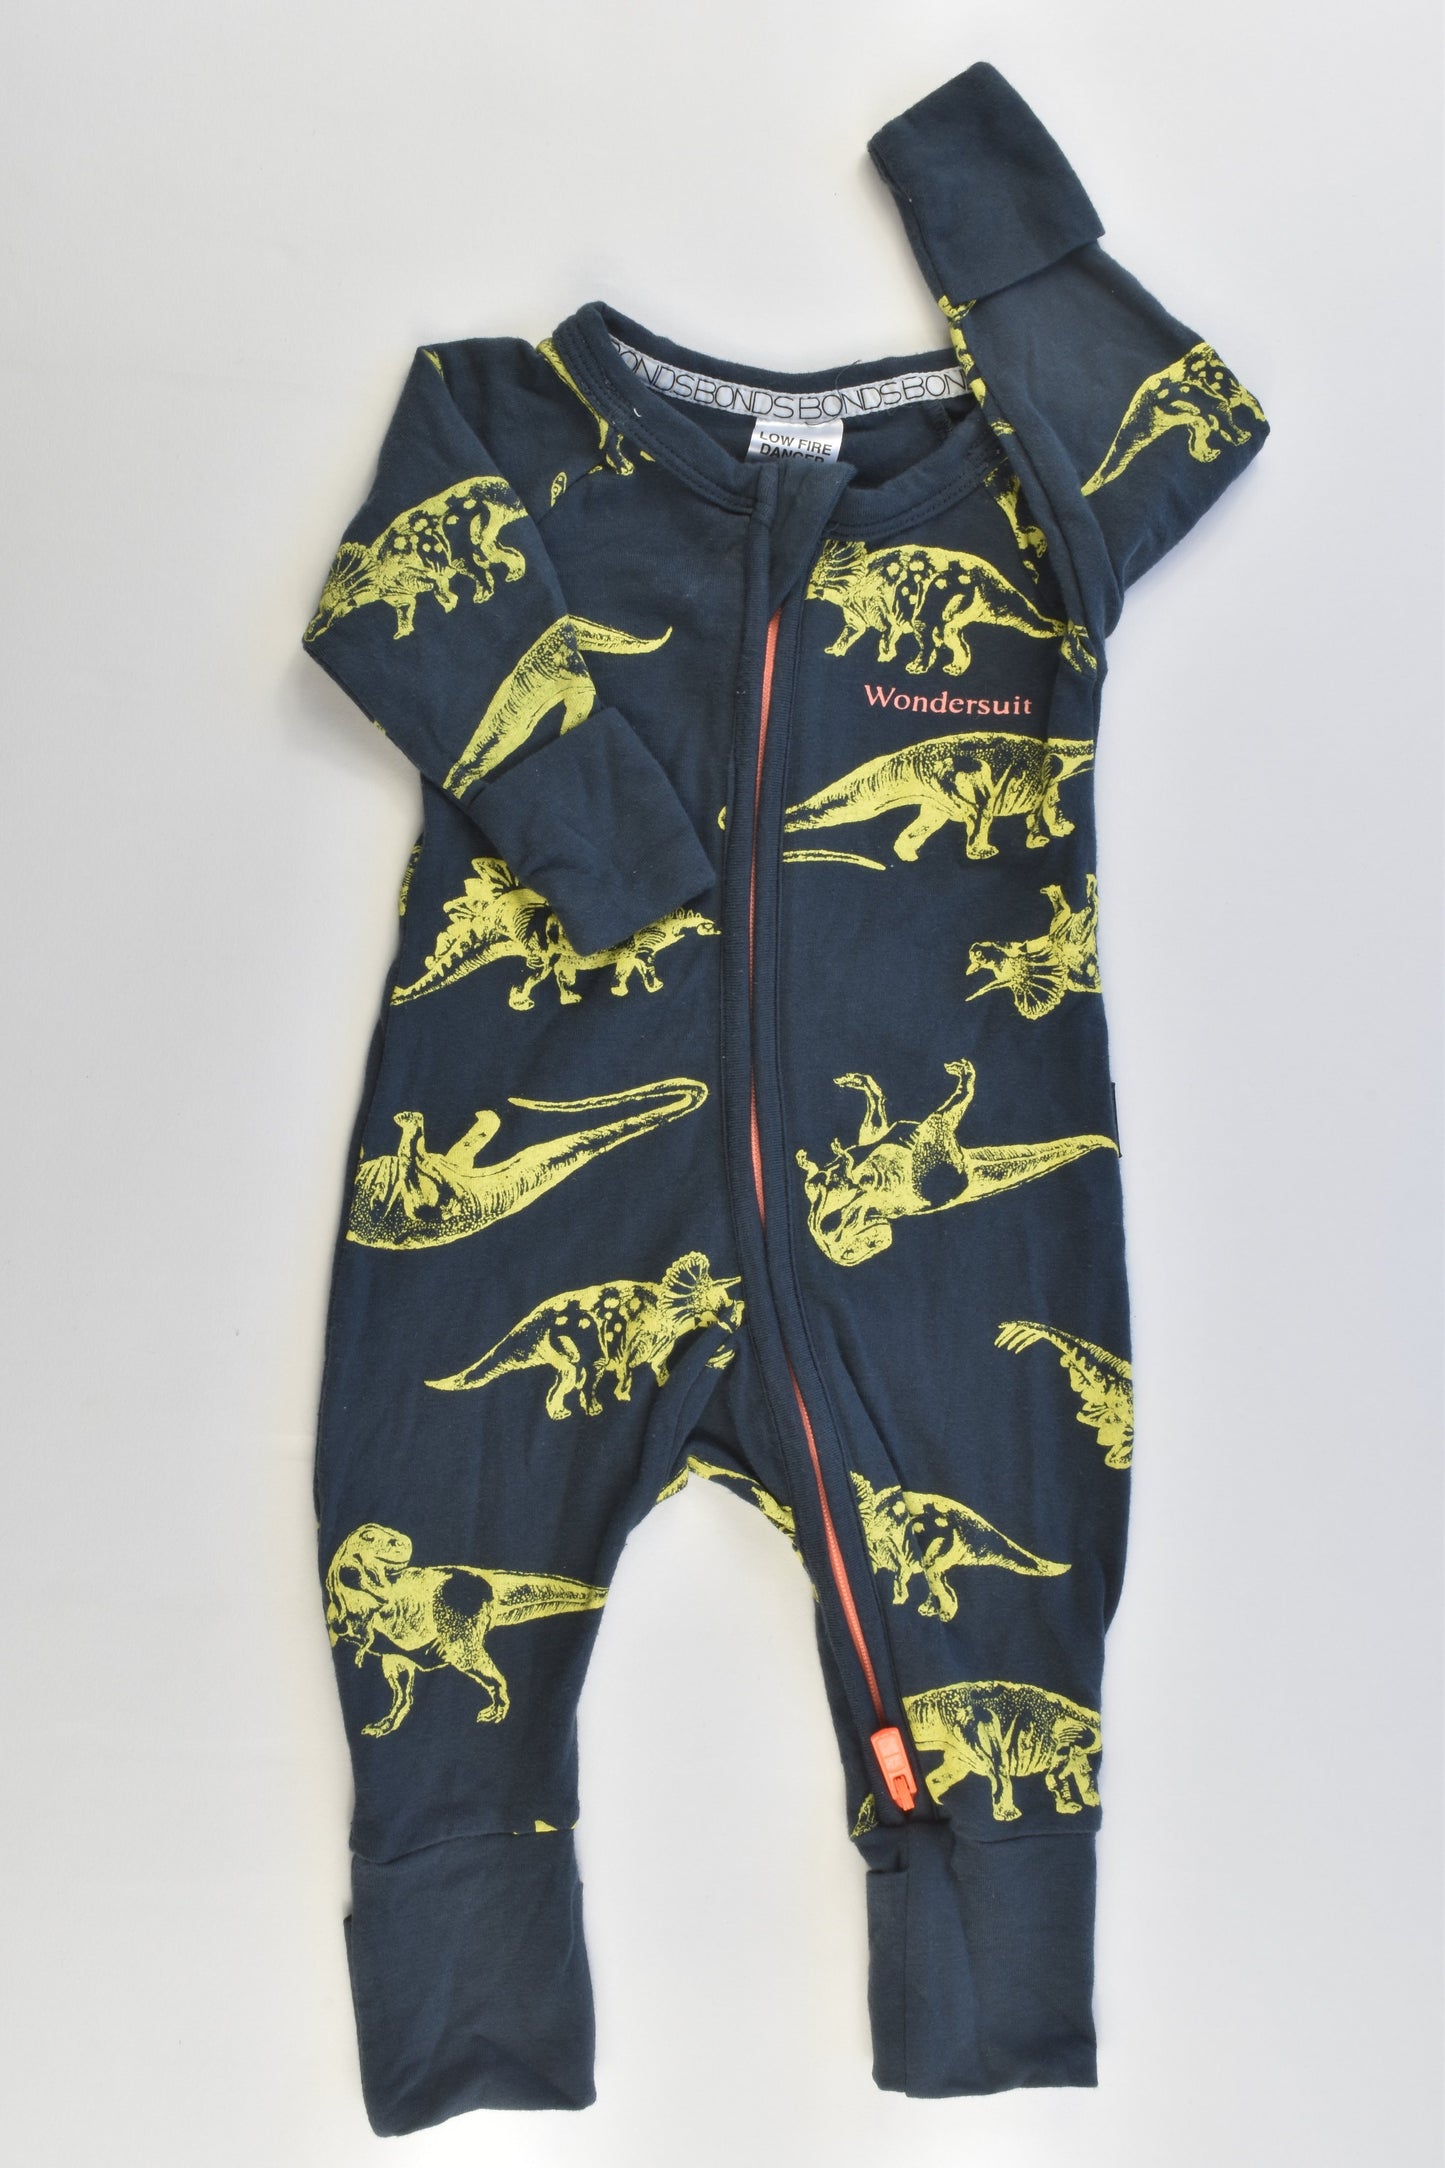 Bonds Size 0000 (Newborn) Dinosaurs Wondersuit